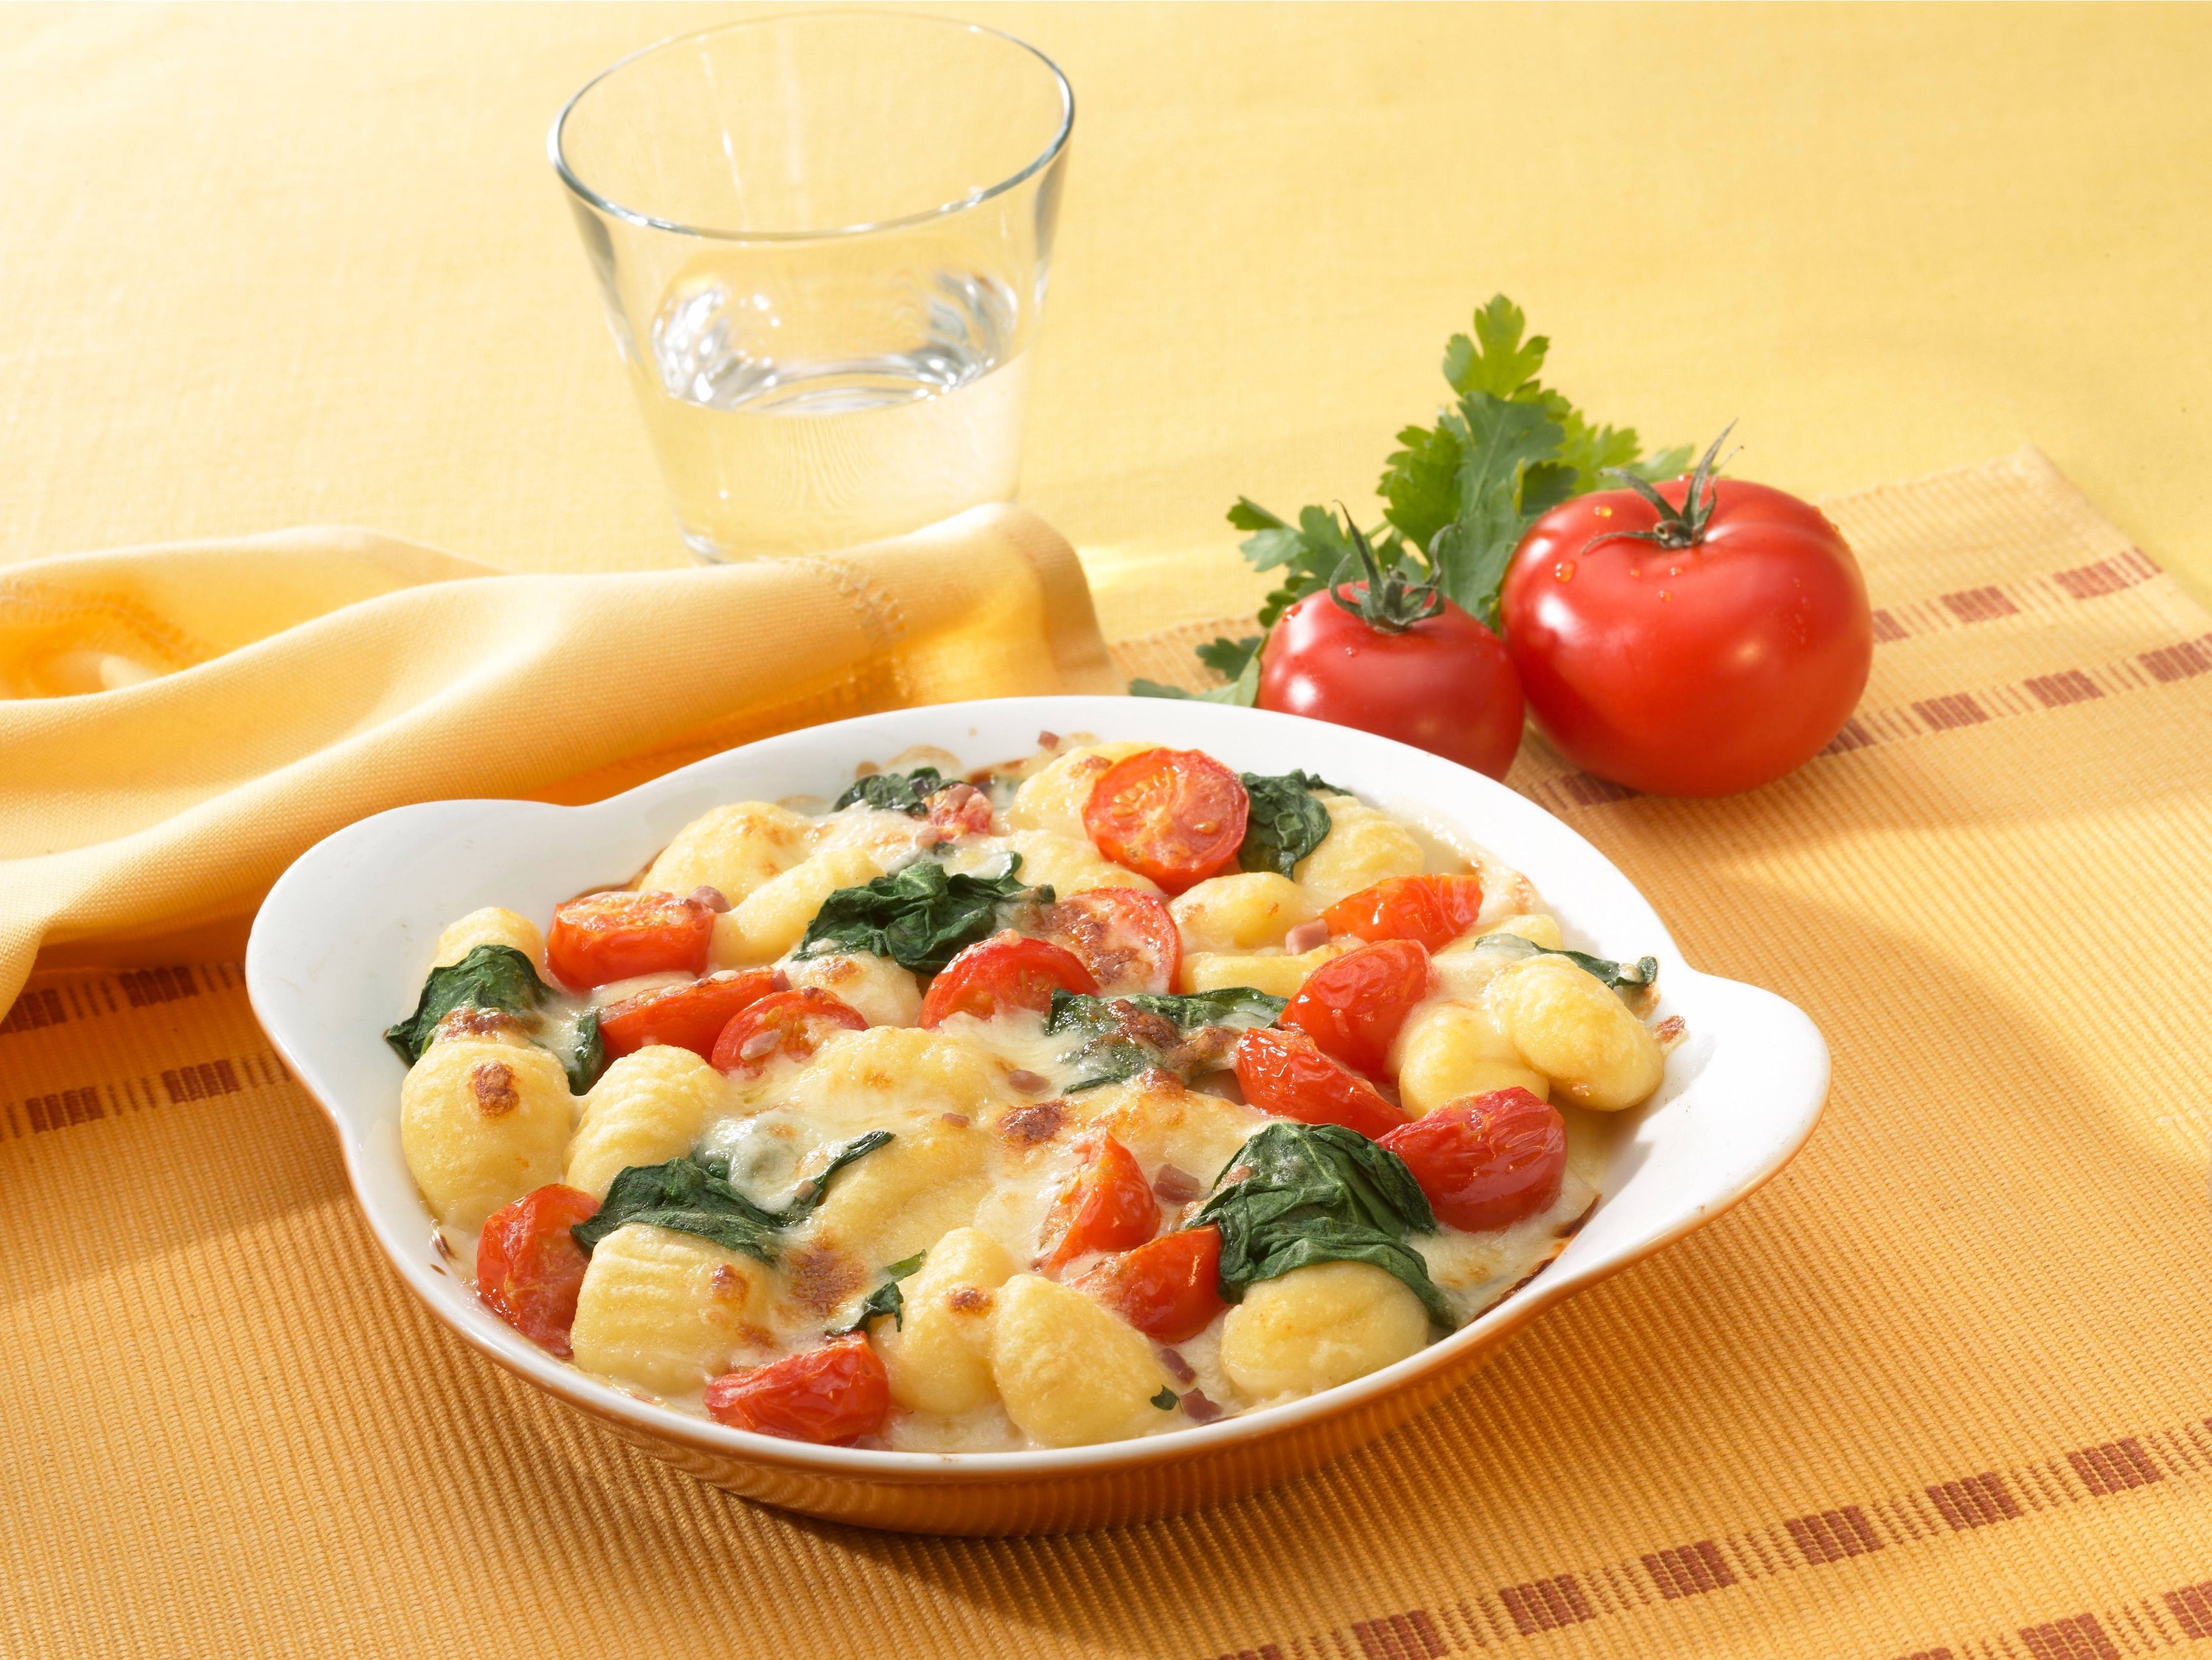 Knorr - Gnocchi mit Tomaten und Basilikum in Paprika Rahm Sauce